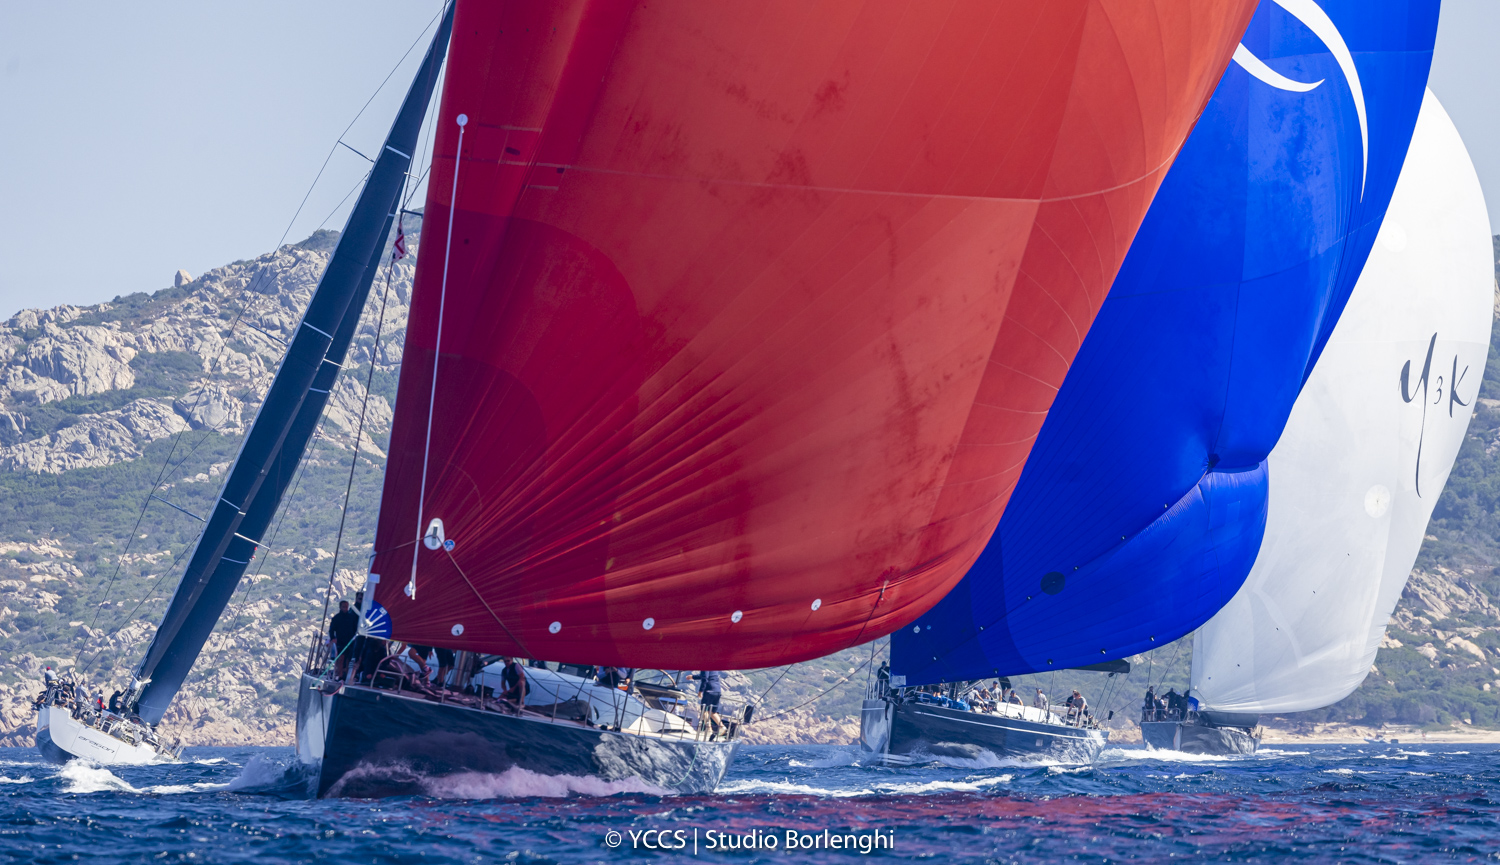 Loro Piana Superyacht Regatta, vincono Missy e Highland Fling XVII - Comunicati Stampa - Yacht Club Costa Smeralda